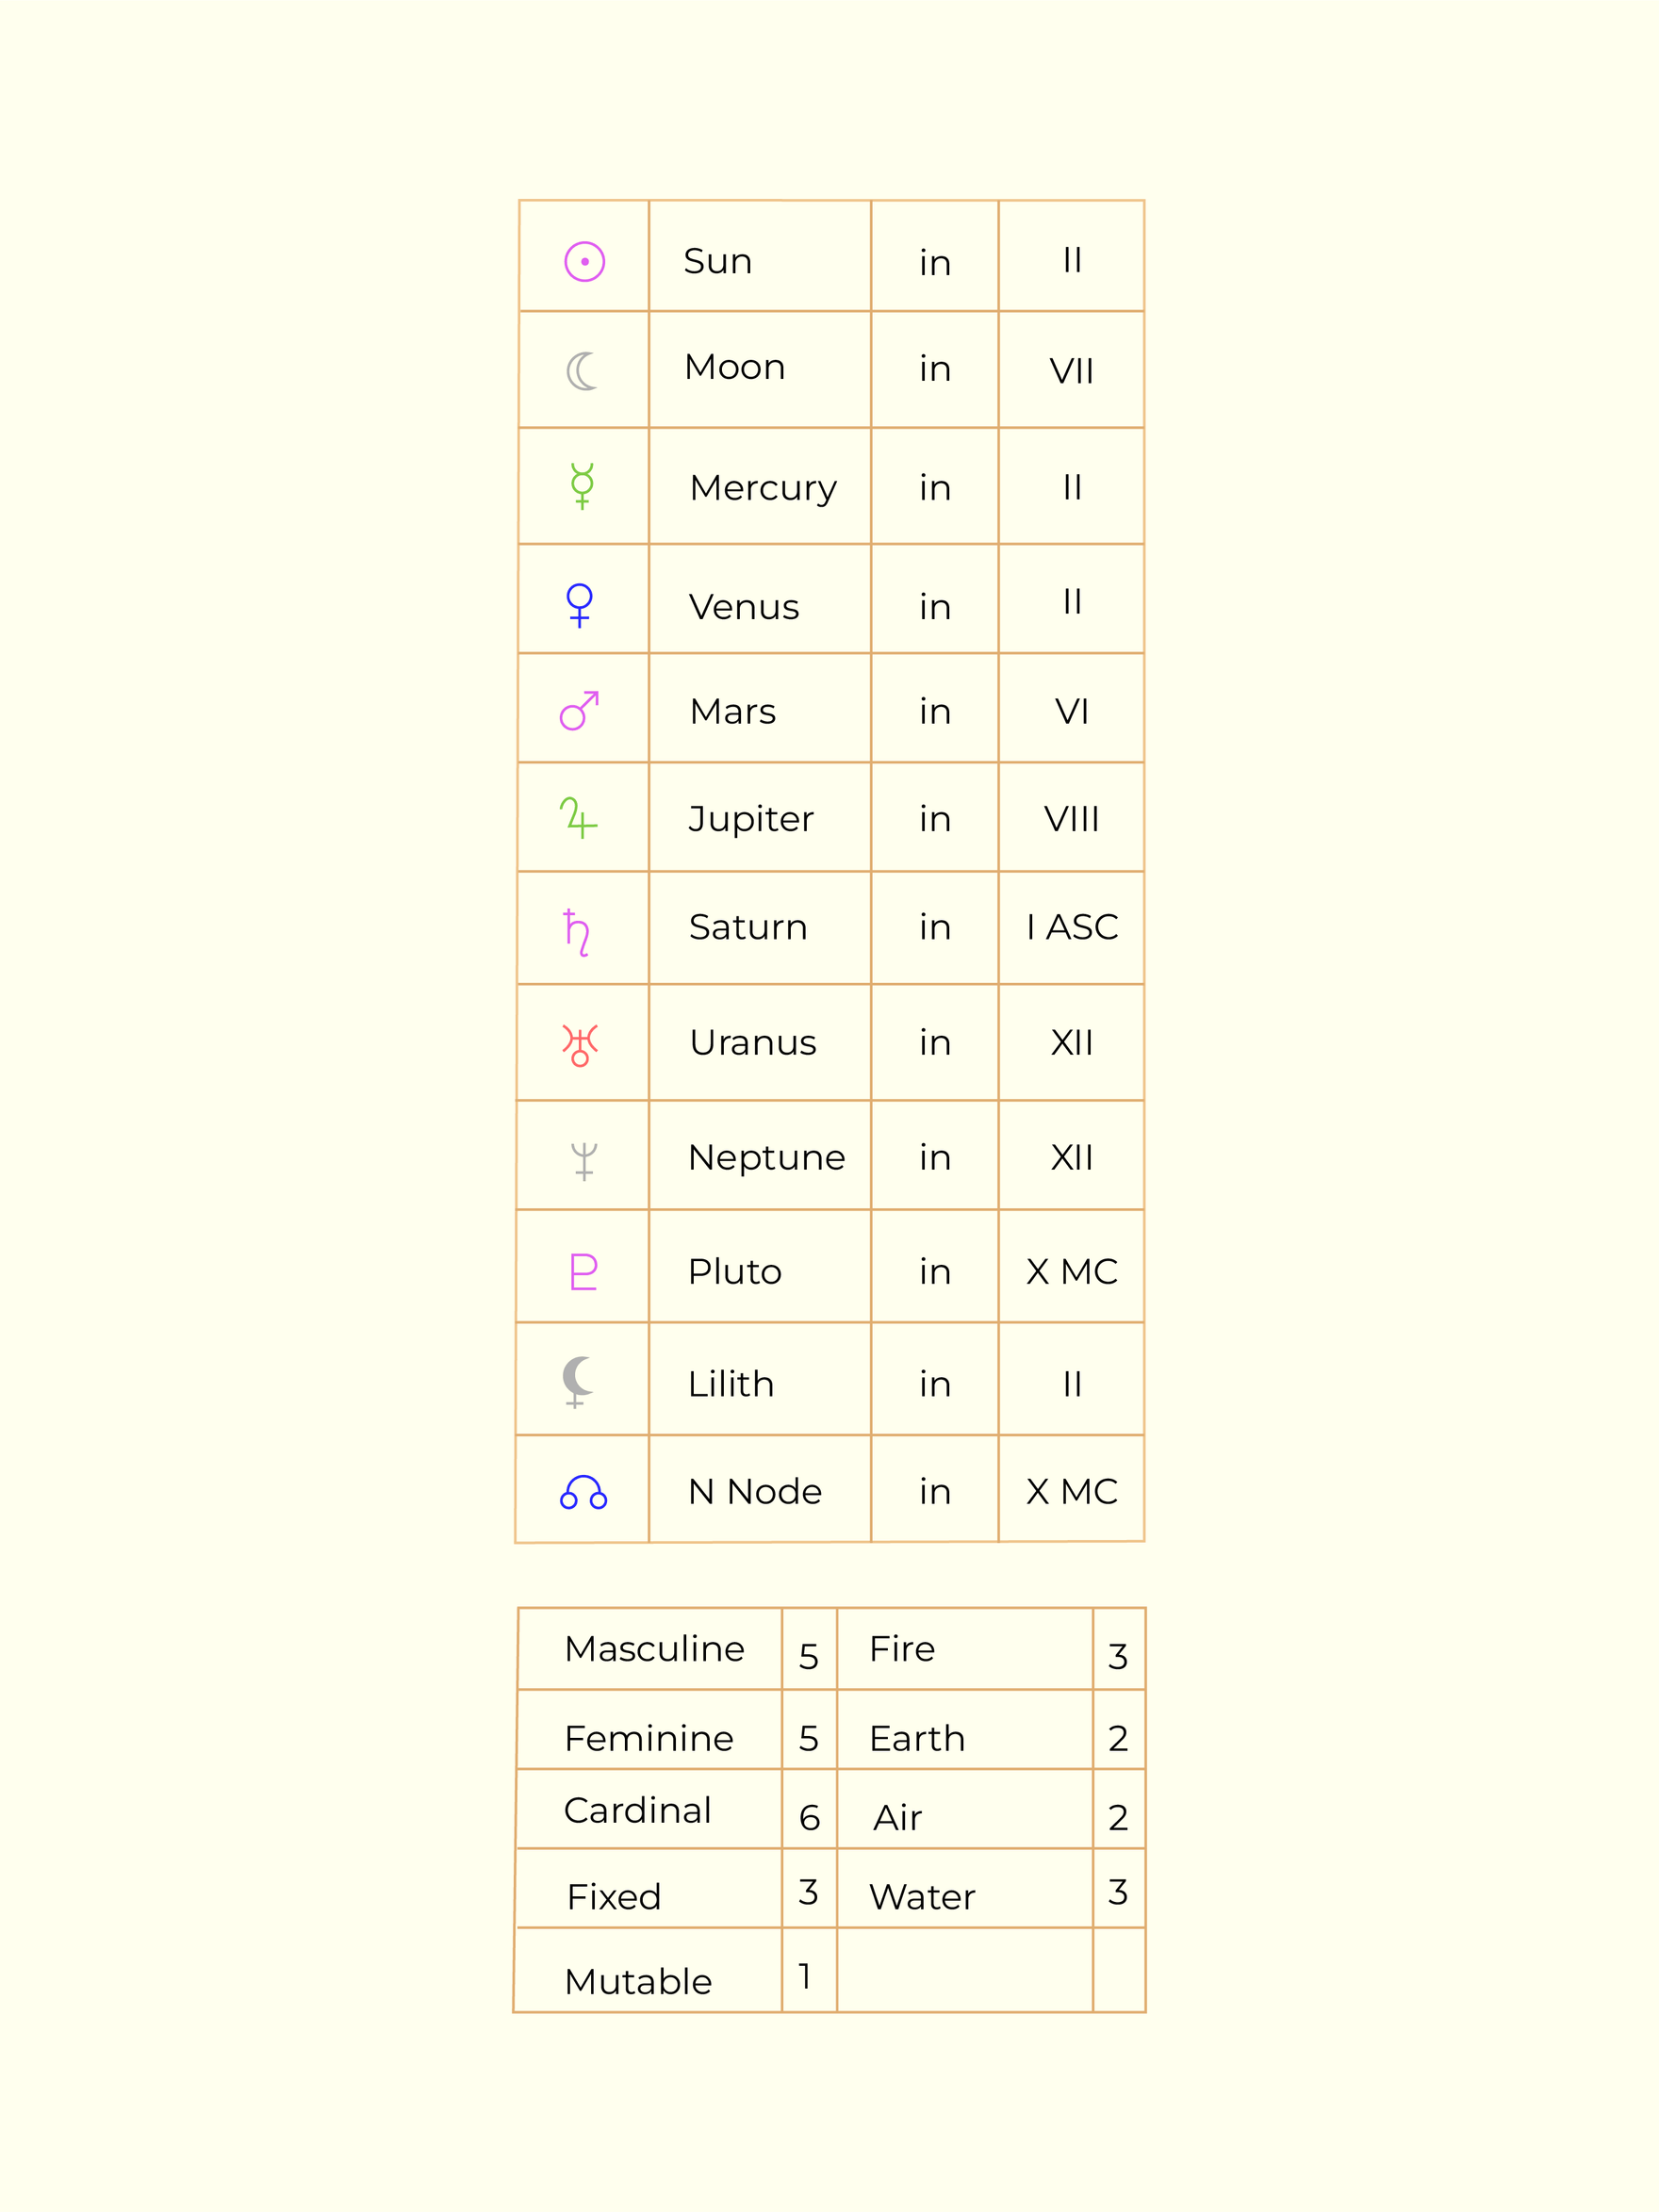 Constellations Zodiac Growth Chart 